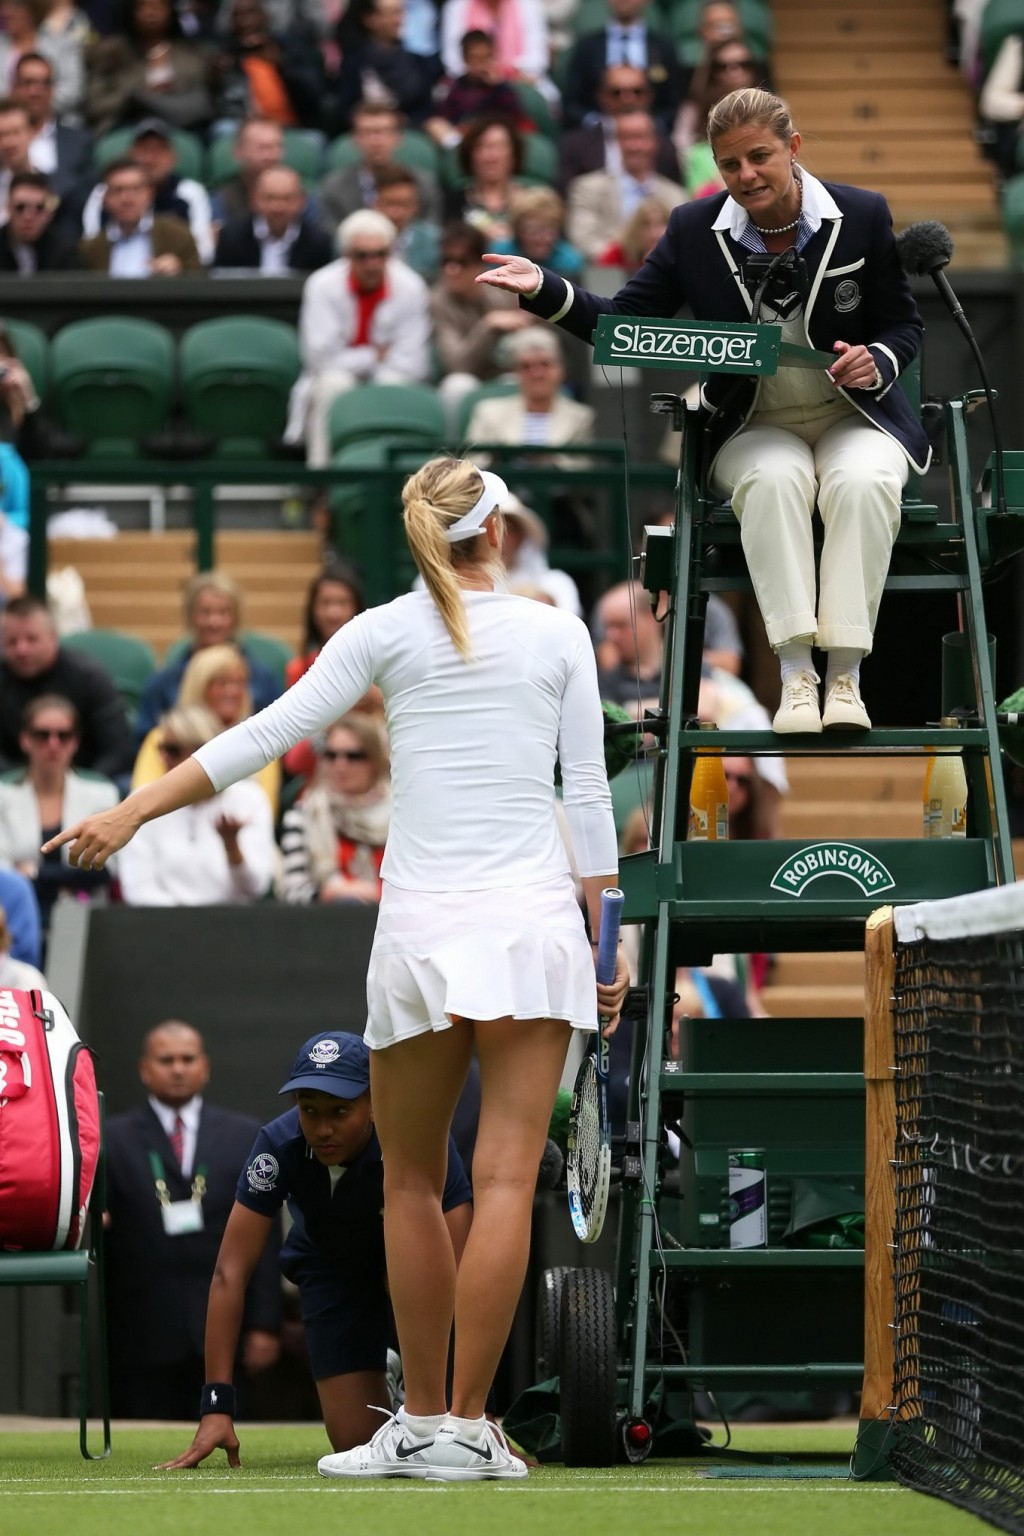 Maria Sharapova flashing her orange panties at the Wimbledon 2013 Day 1 in Londo #75227265